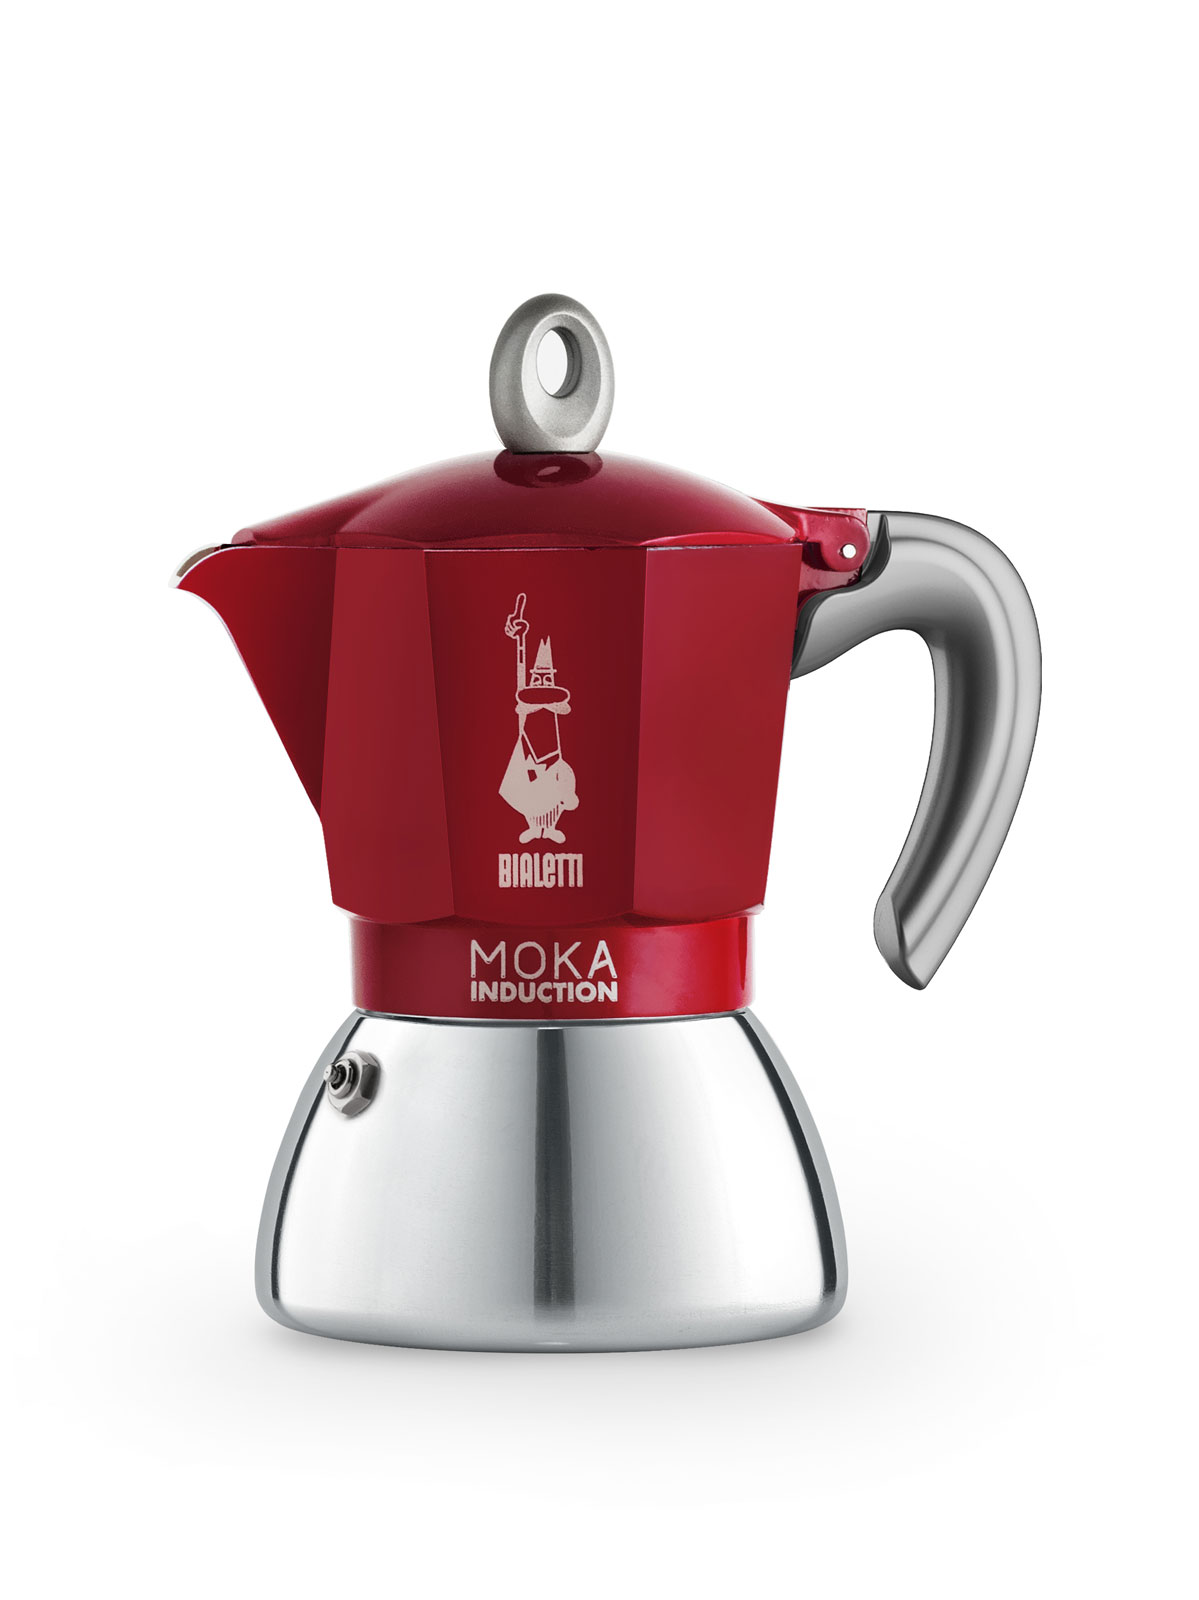 Bialetti Italien New Moka Induktion Espressokocher Red 6 Tassen